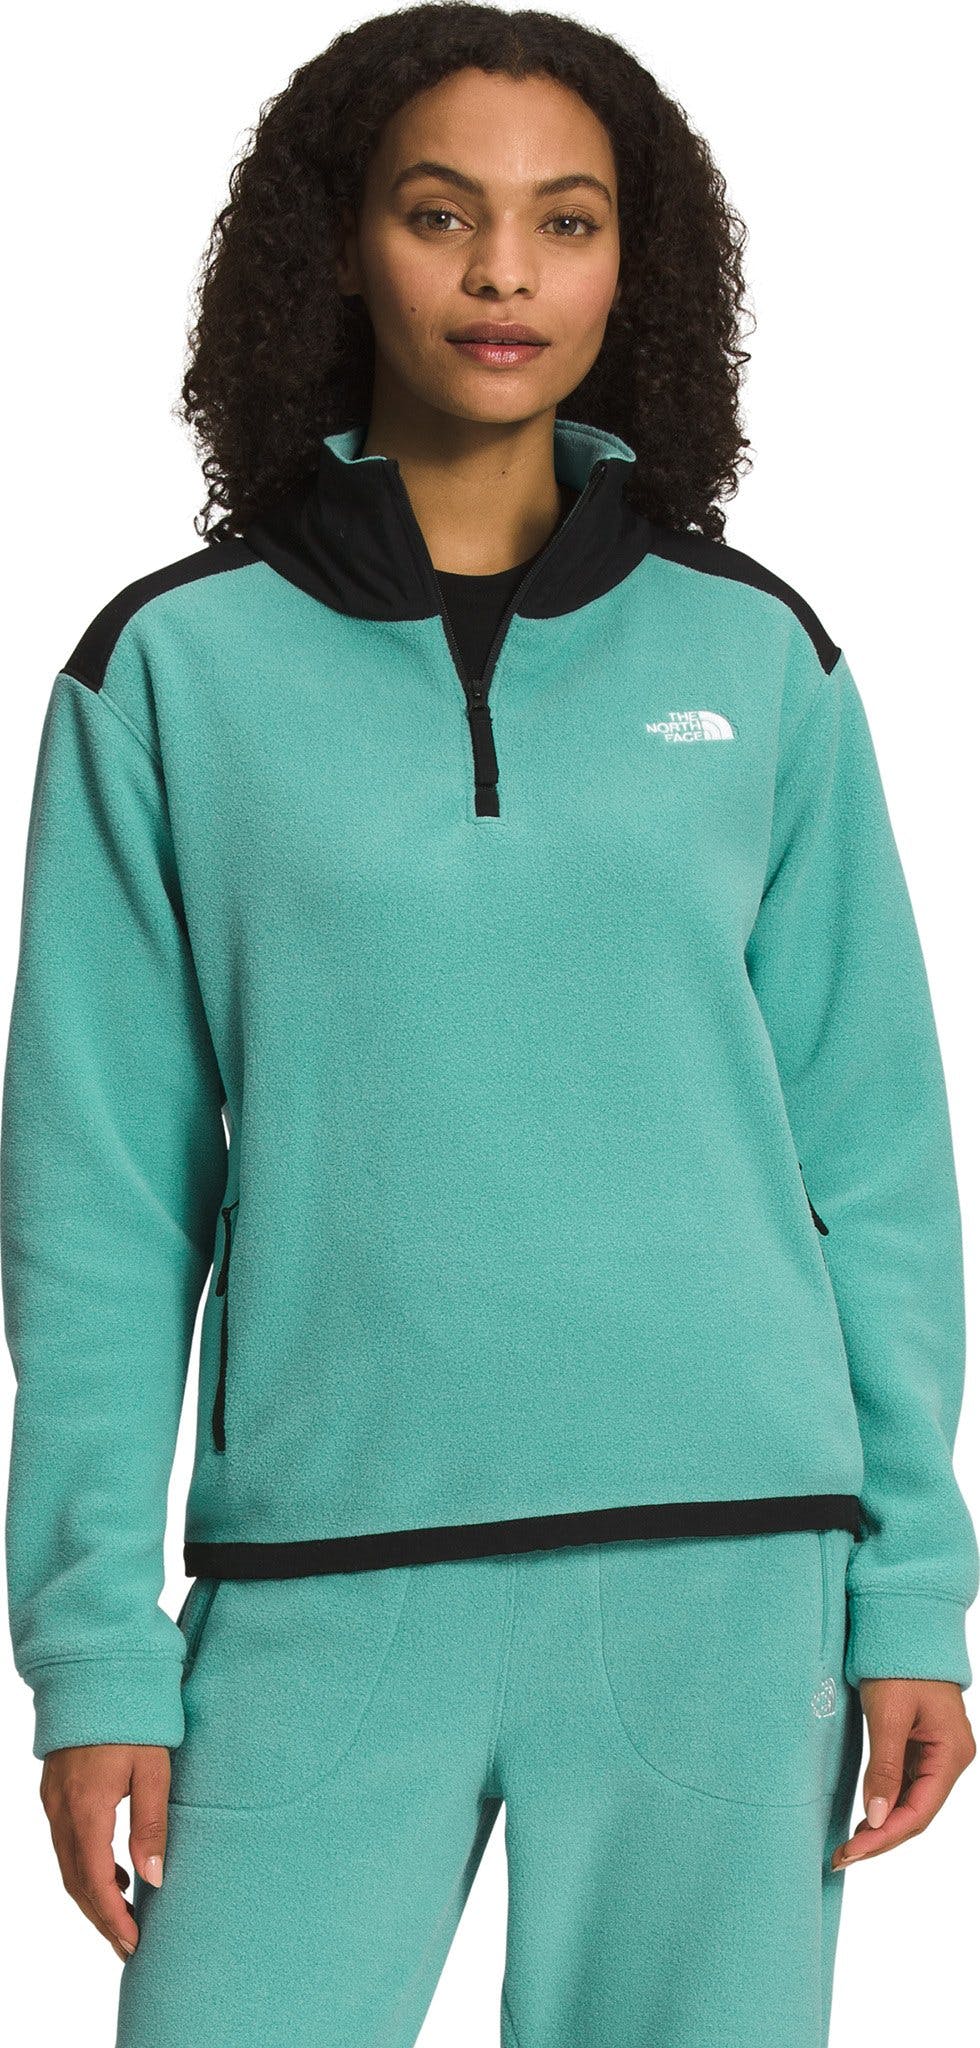 Product image for Alpine Polartec 200 ¼ Zip Sweater - Women's